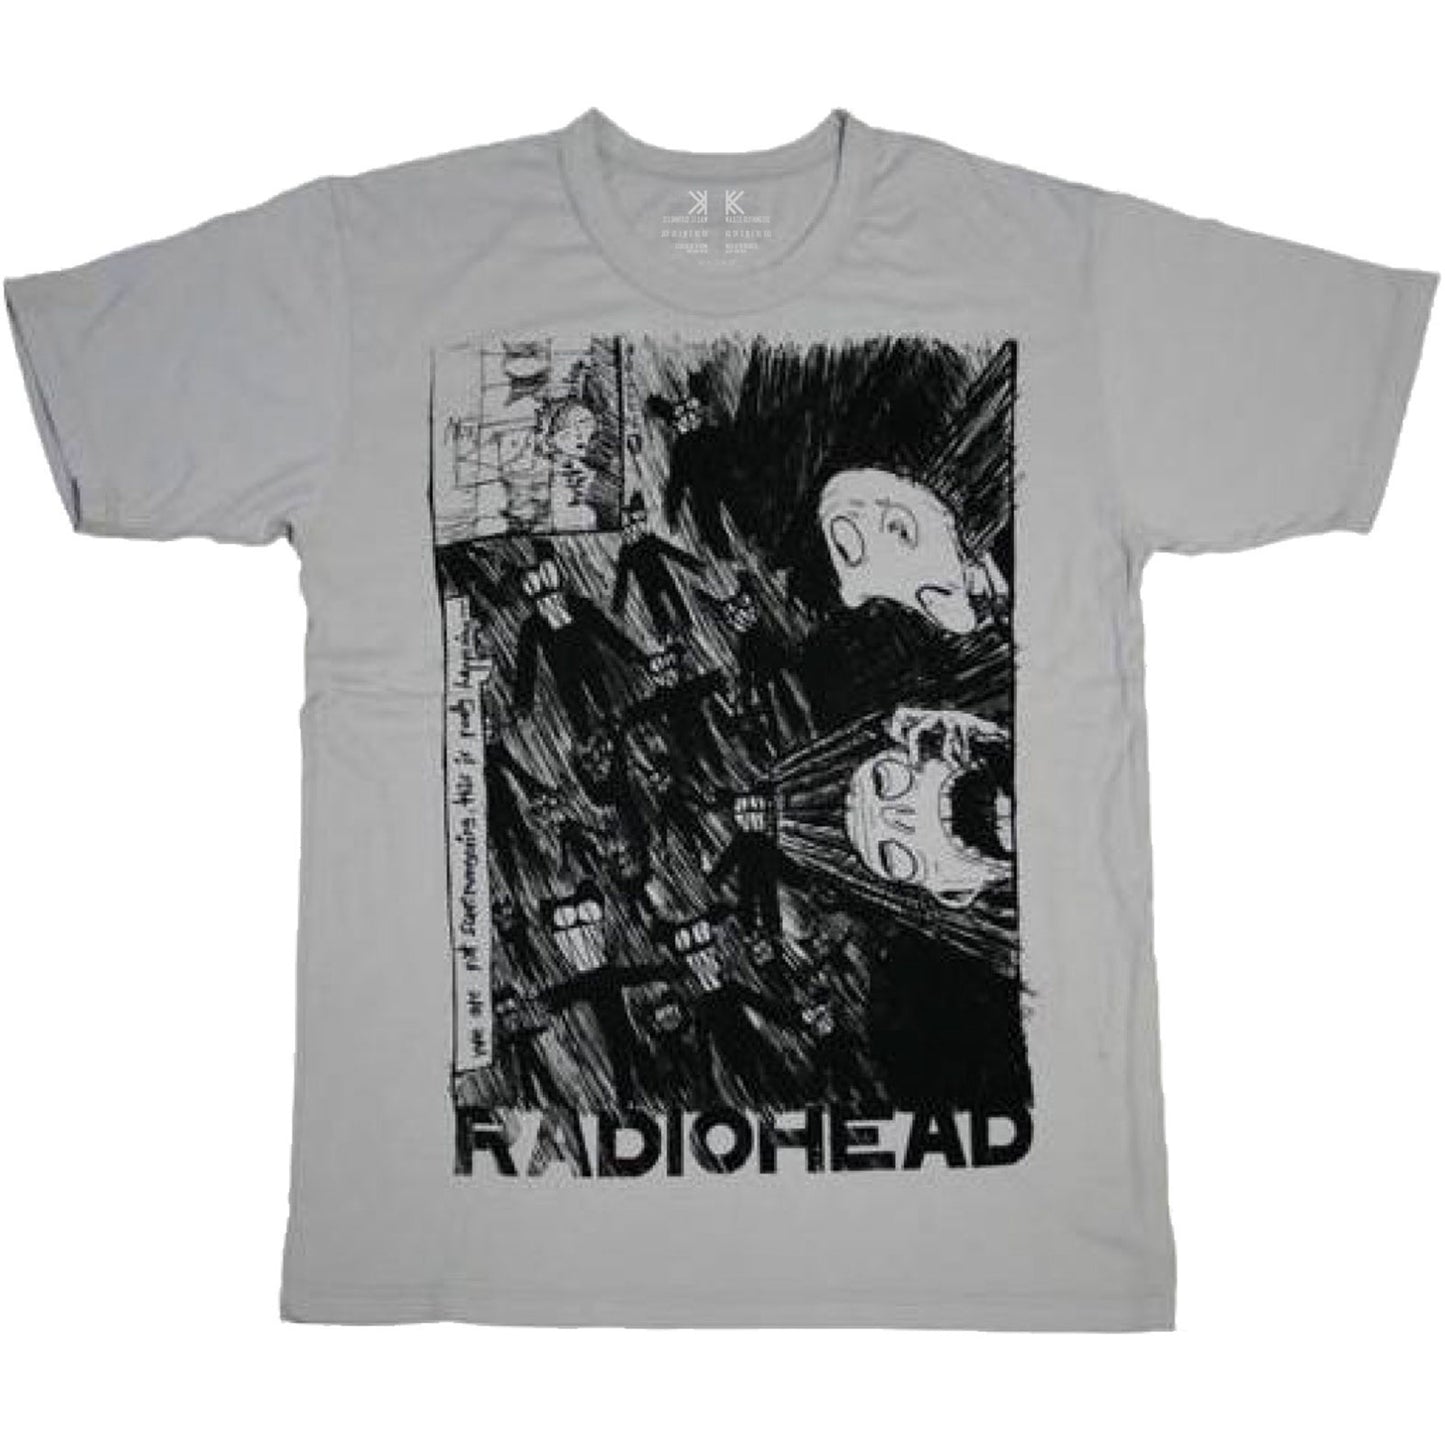 Radiohead T-Shirt: Scribble